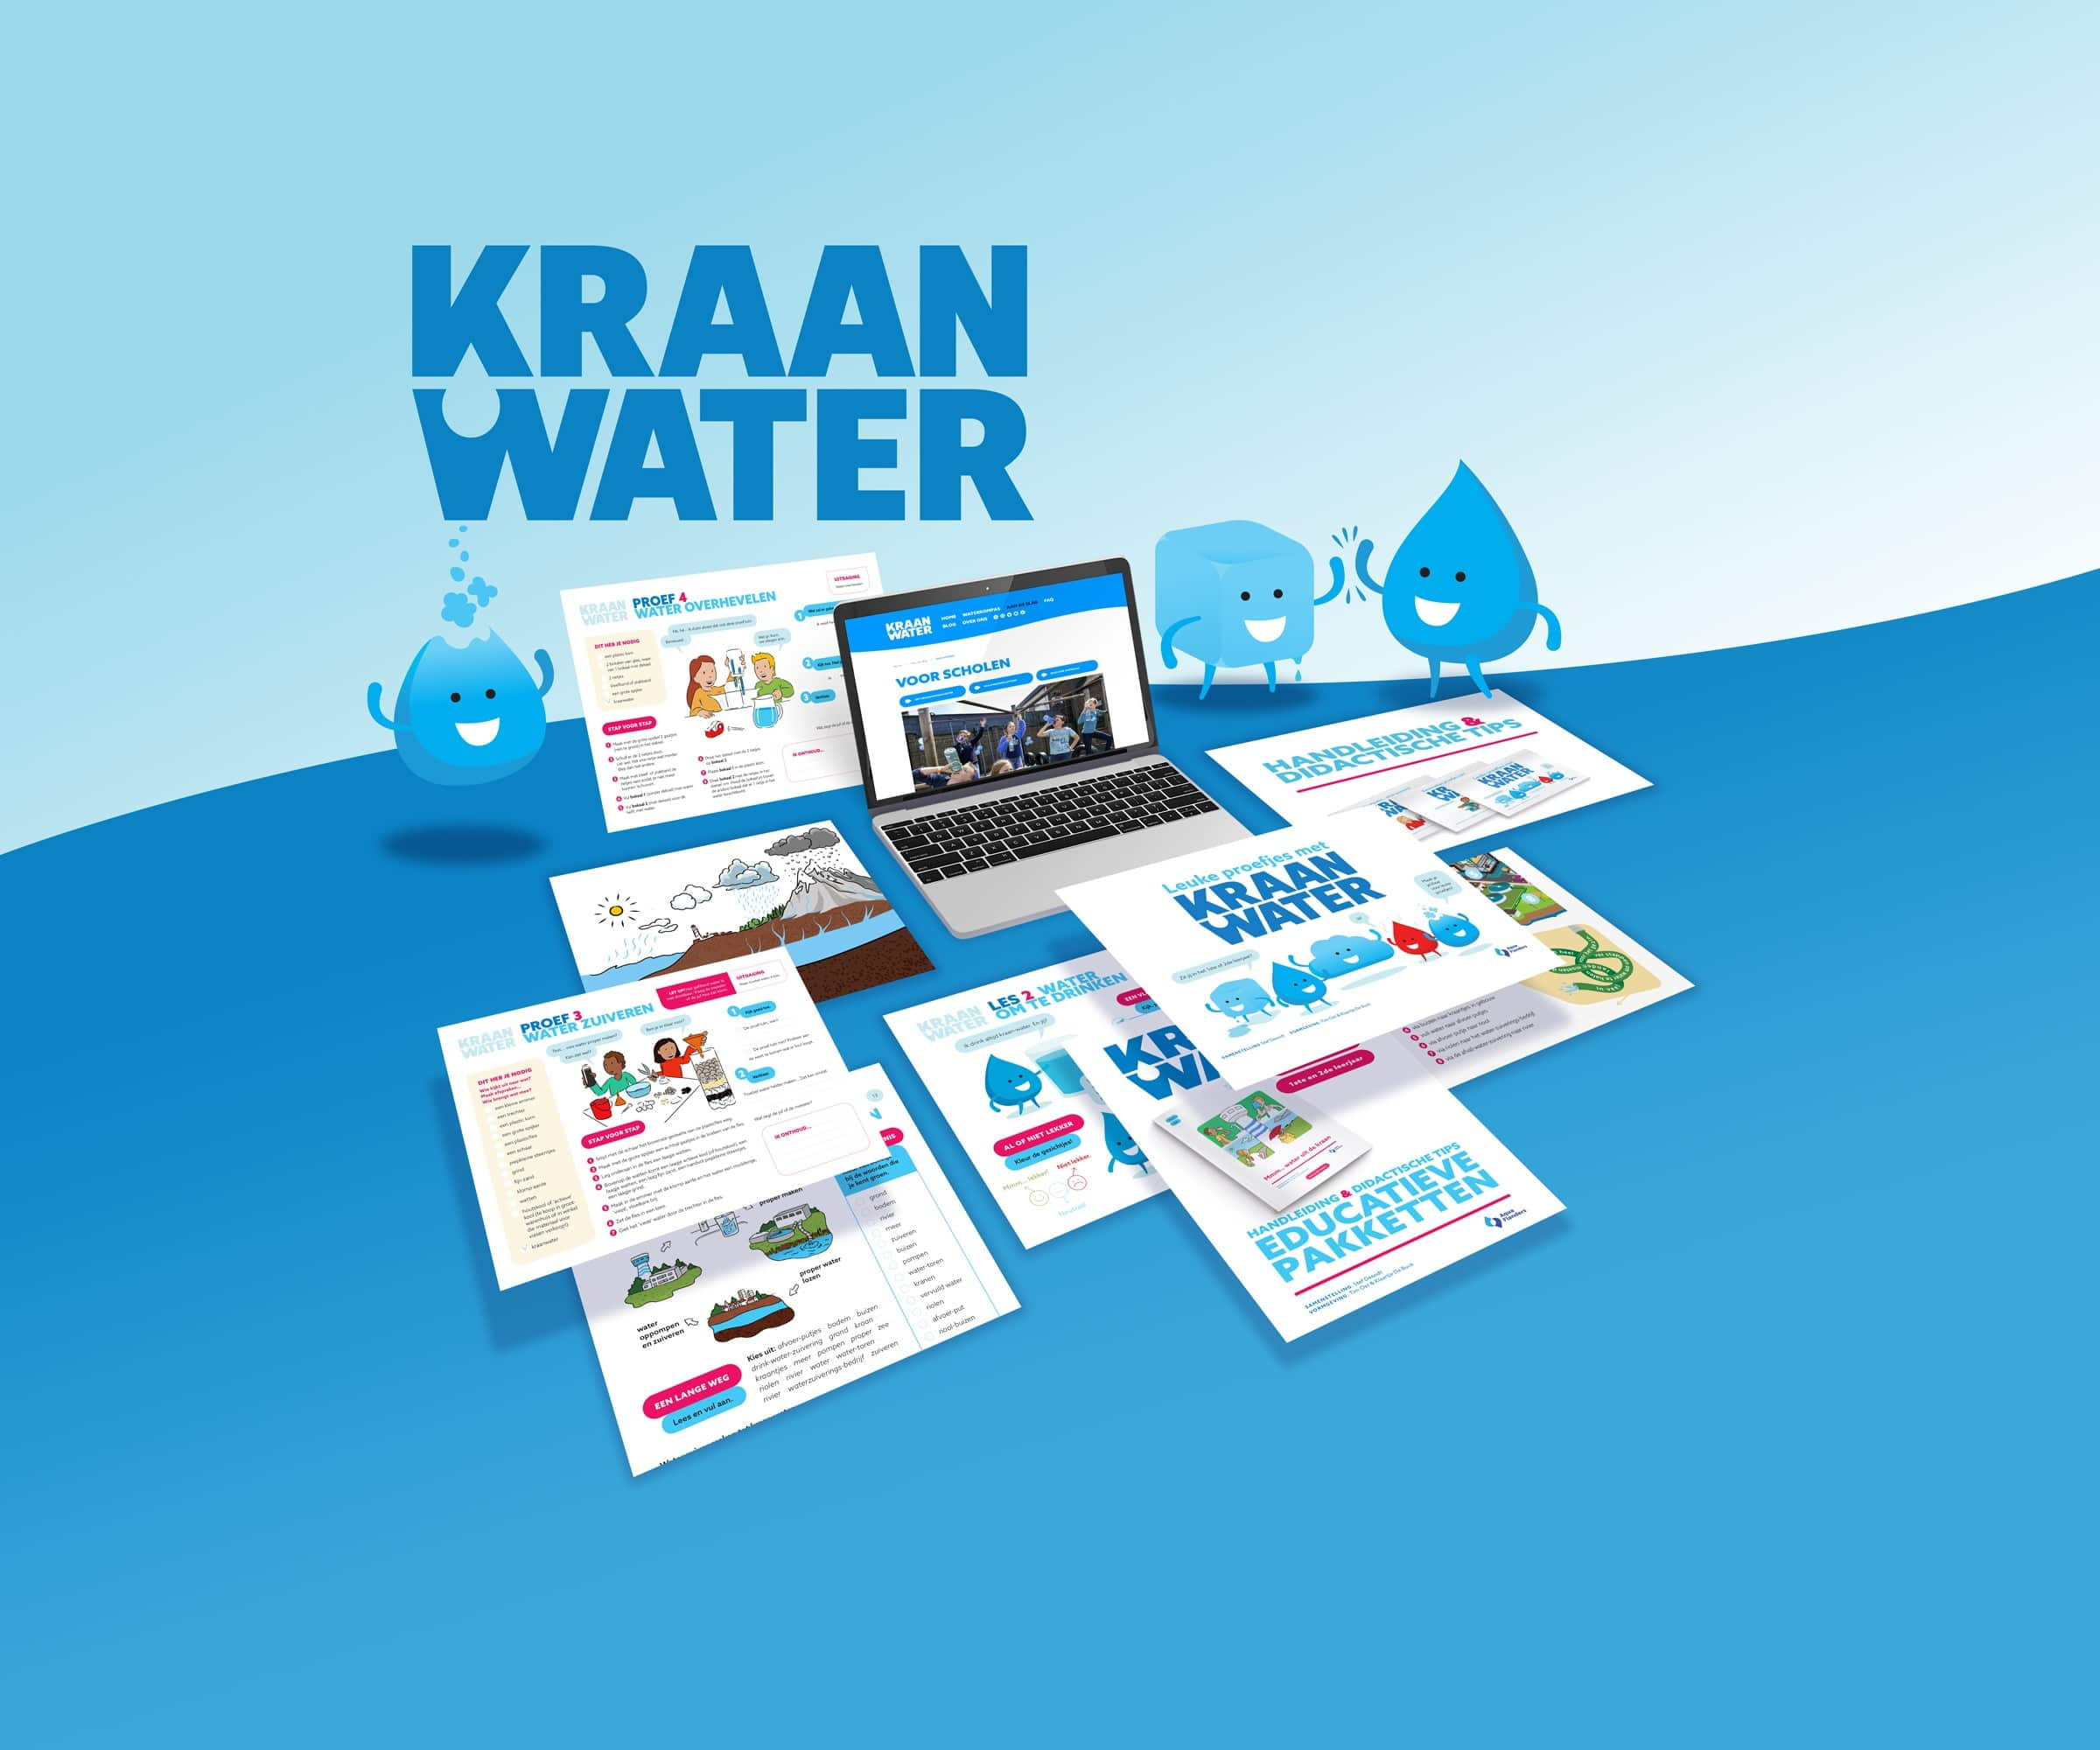 #ikdrinkkraanwater